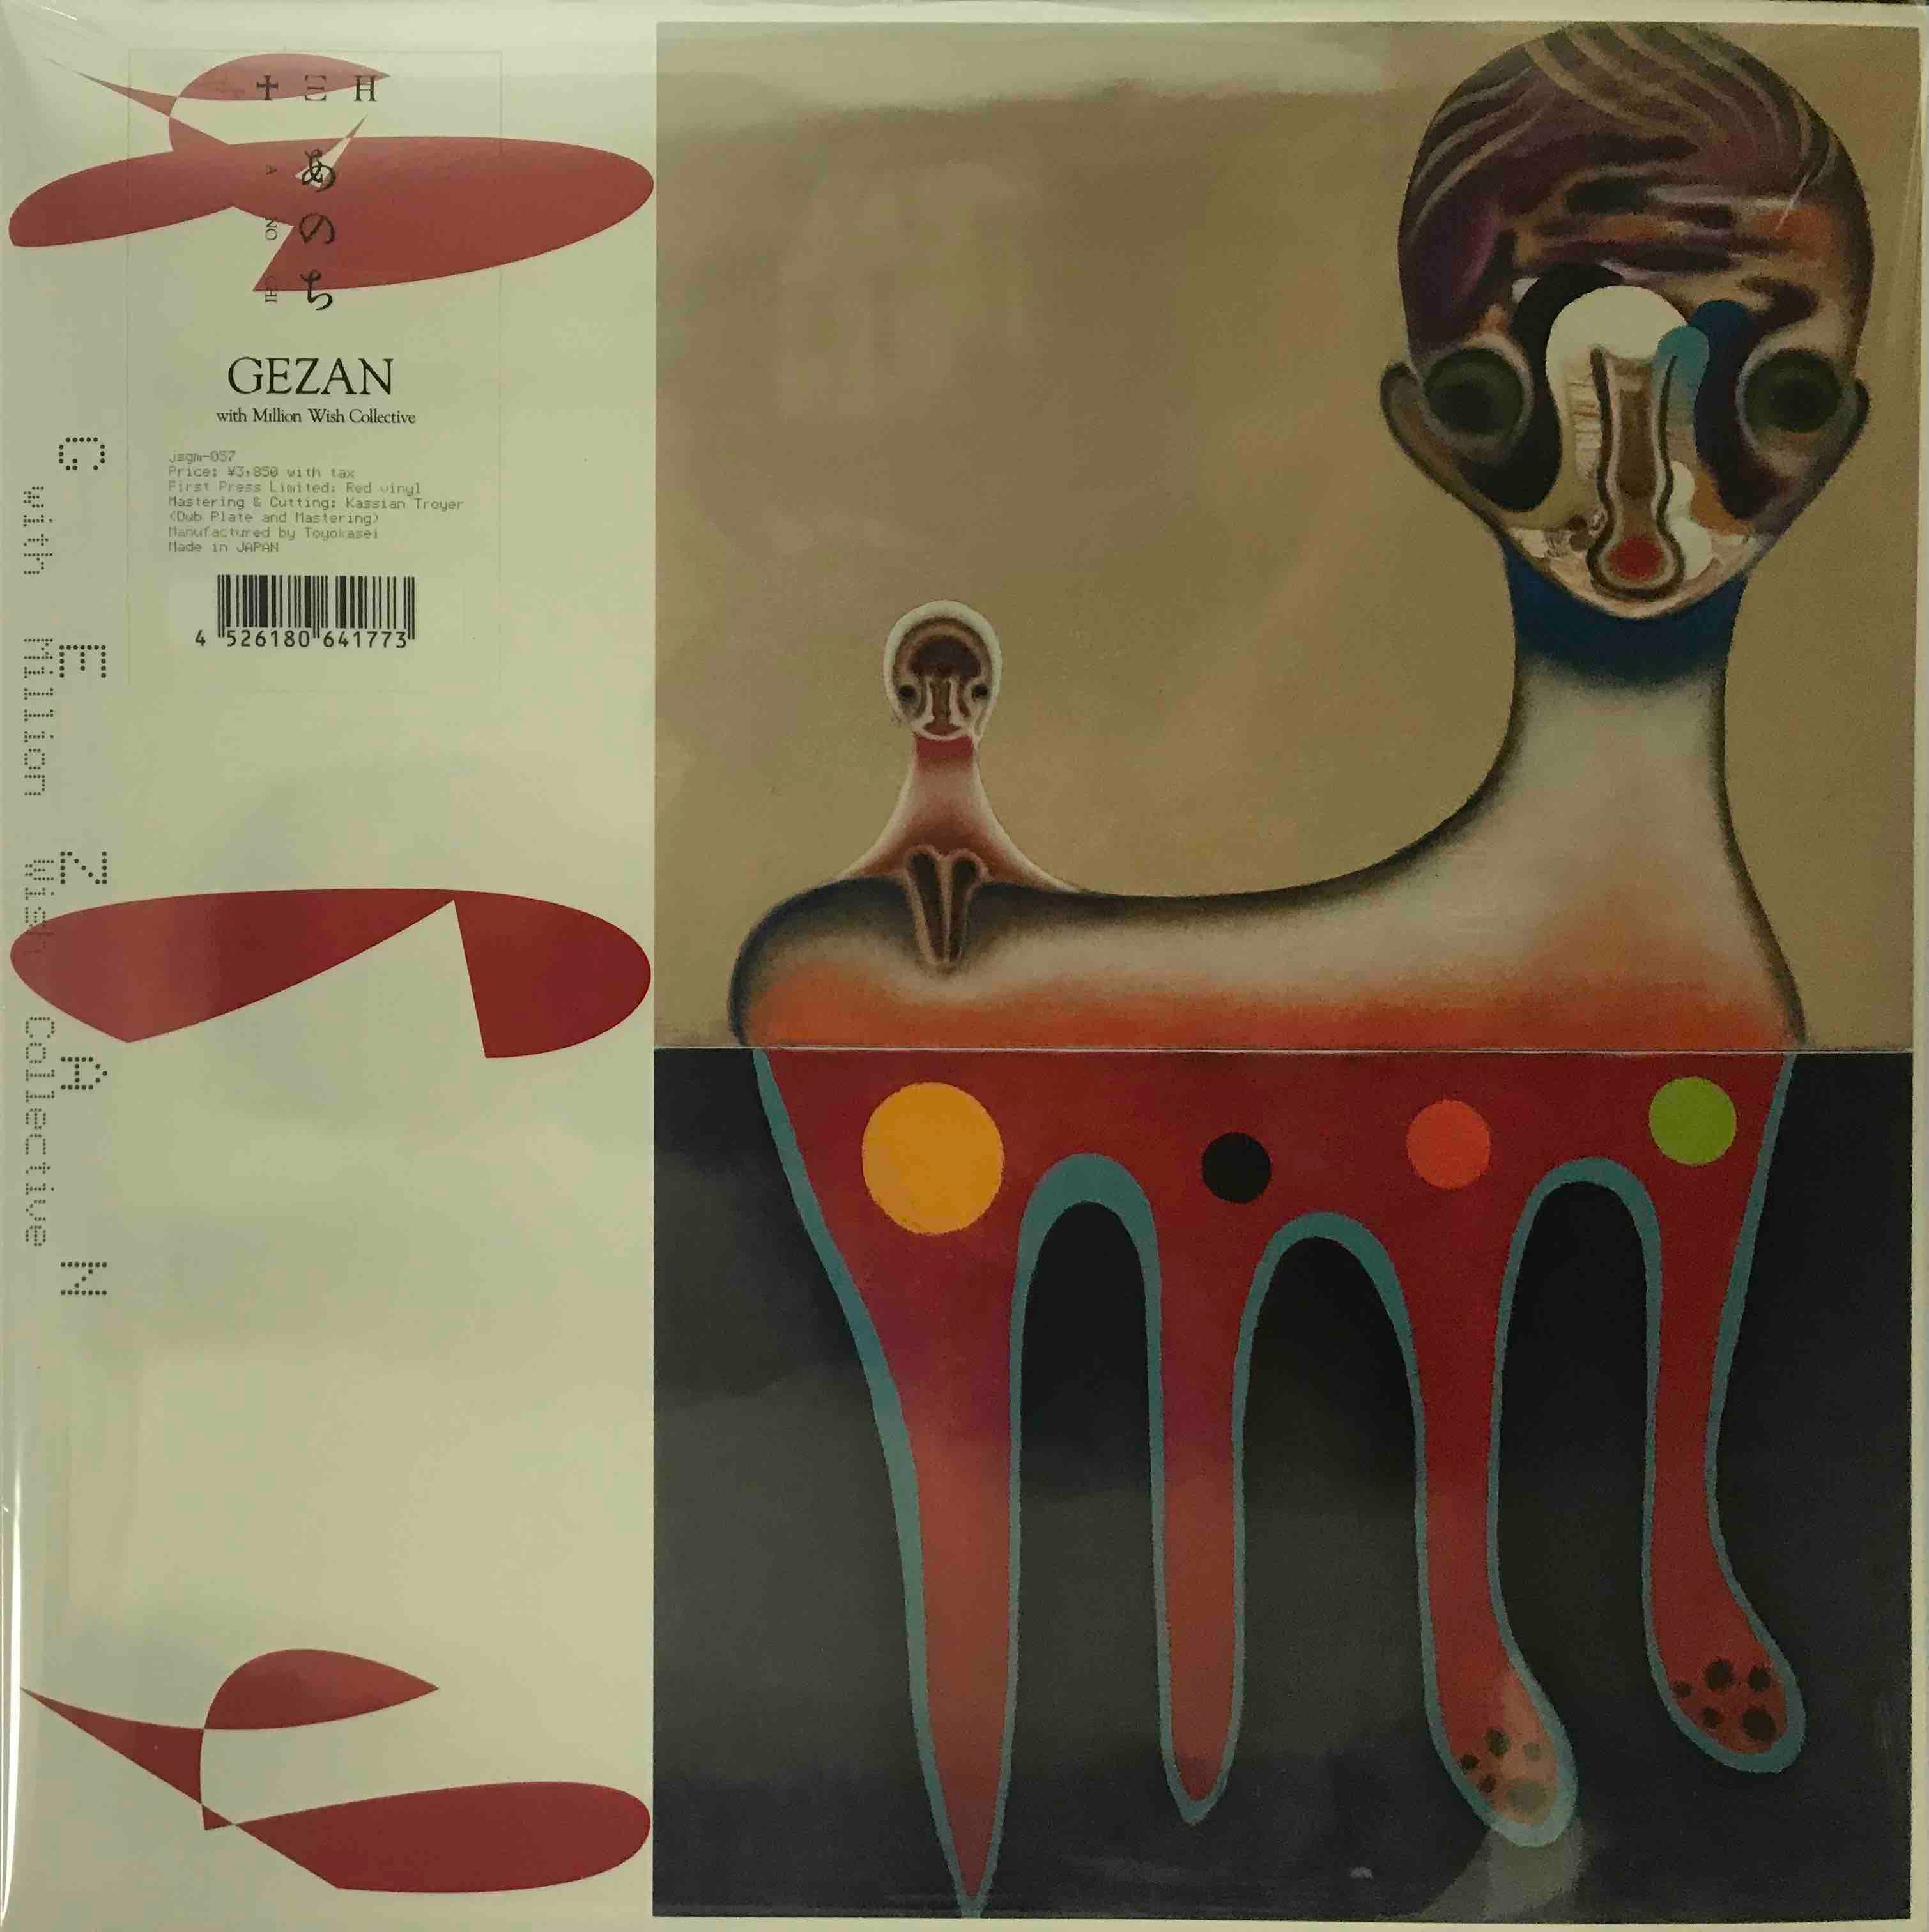 GEZAN Silence Will Speak レコード LP - 邦楽